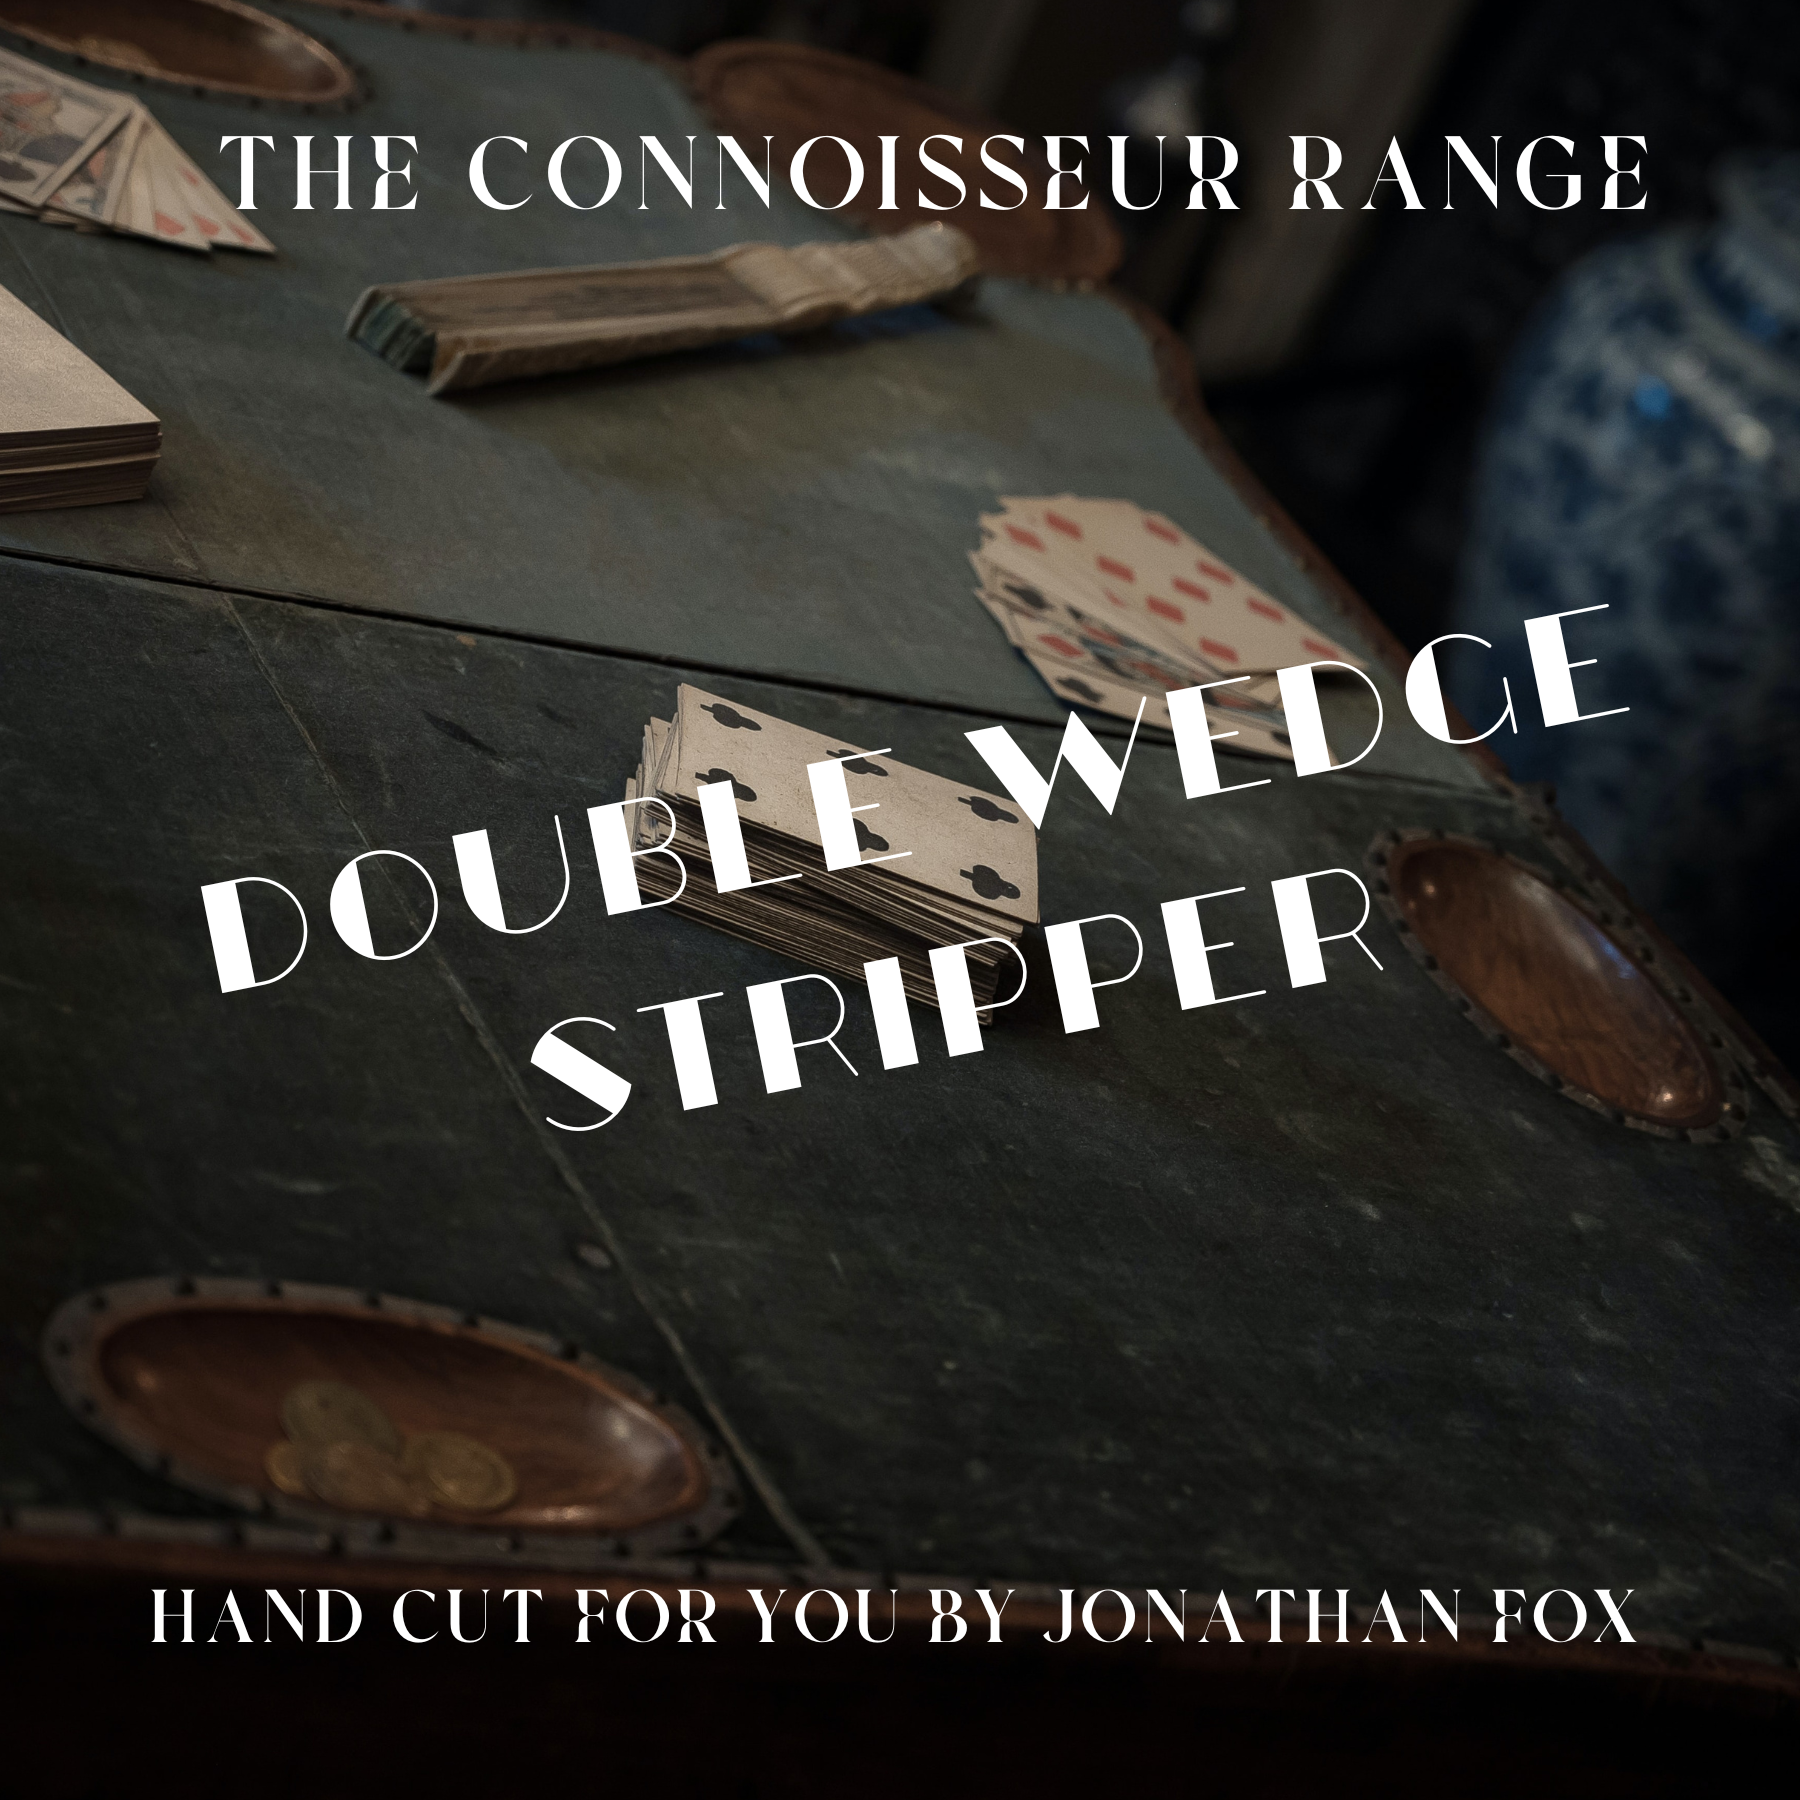 Double Wedge stripper Deck by Jonathan Fox